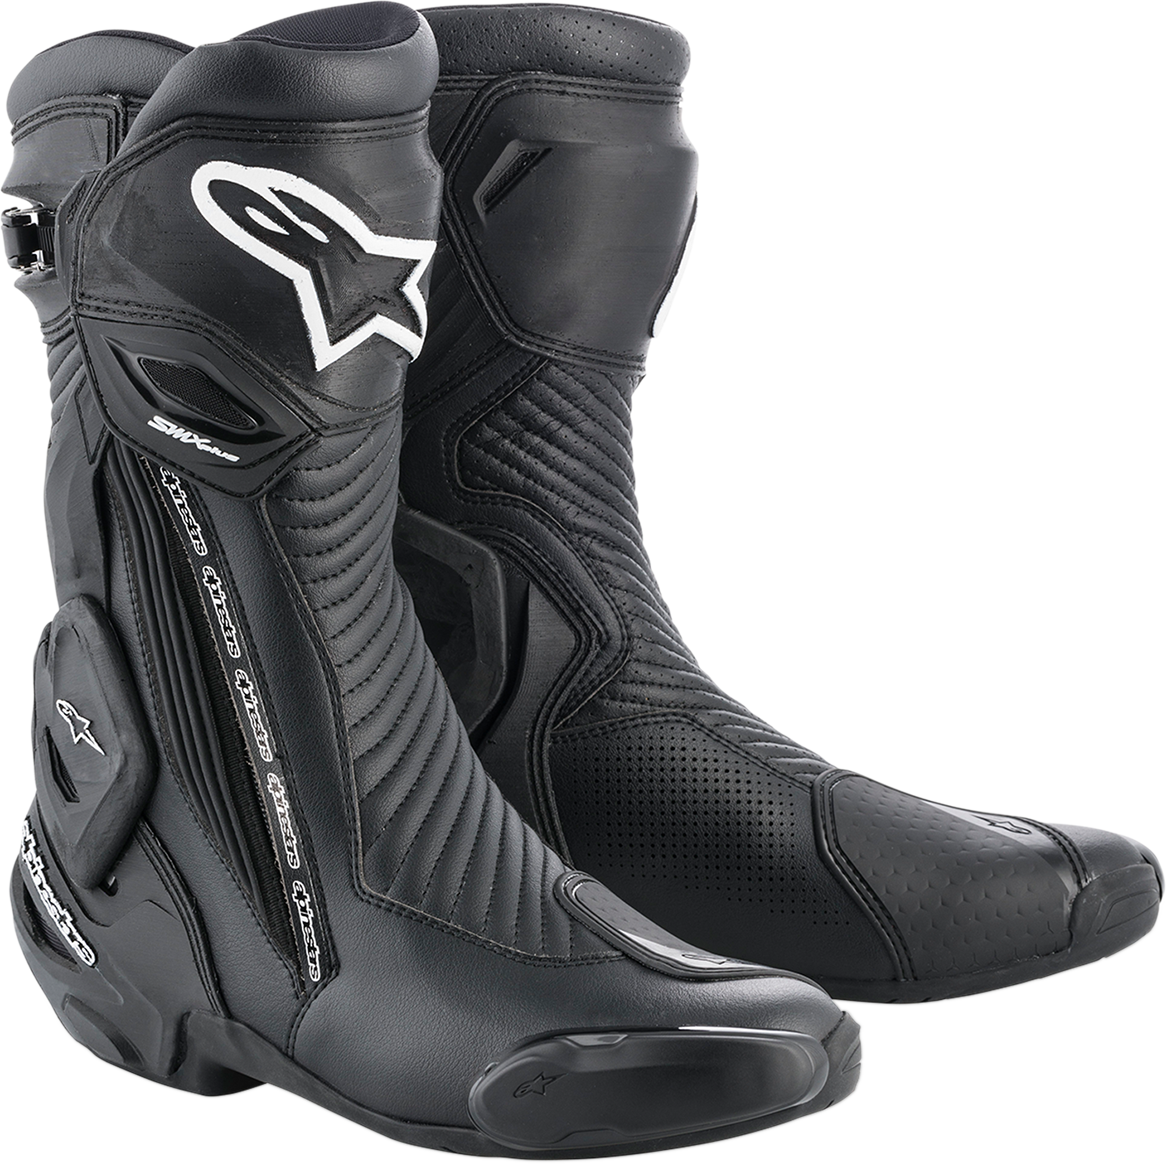 ALPINESTARS SMX+ Boots - Black - US 9 / EU 43 2221019-10-43